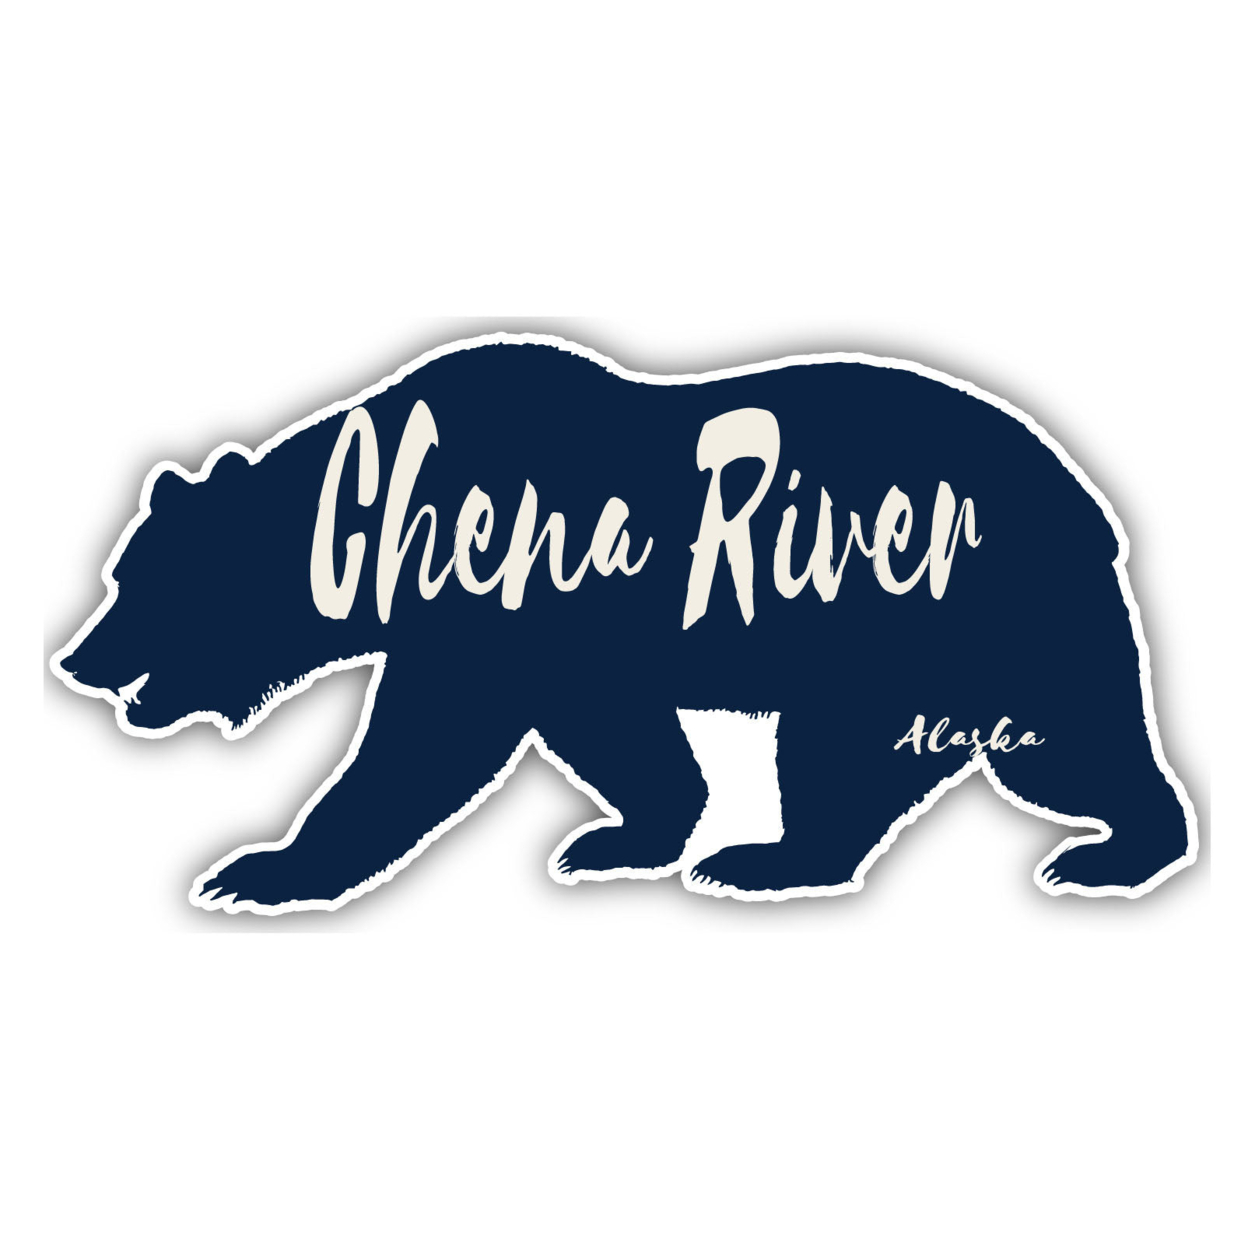 Chena River Alaska Souvenir Decorative Stickers (Choose Theme And Size) - 4-Pack, 12-Inch, Bear